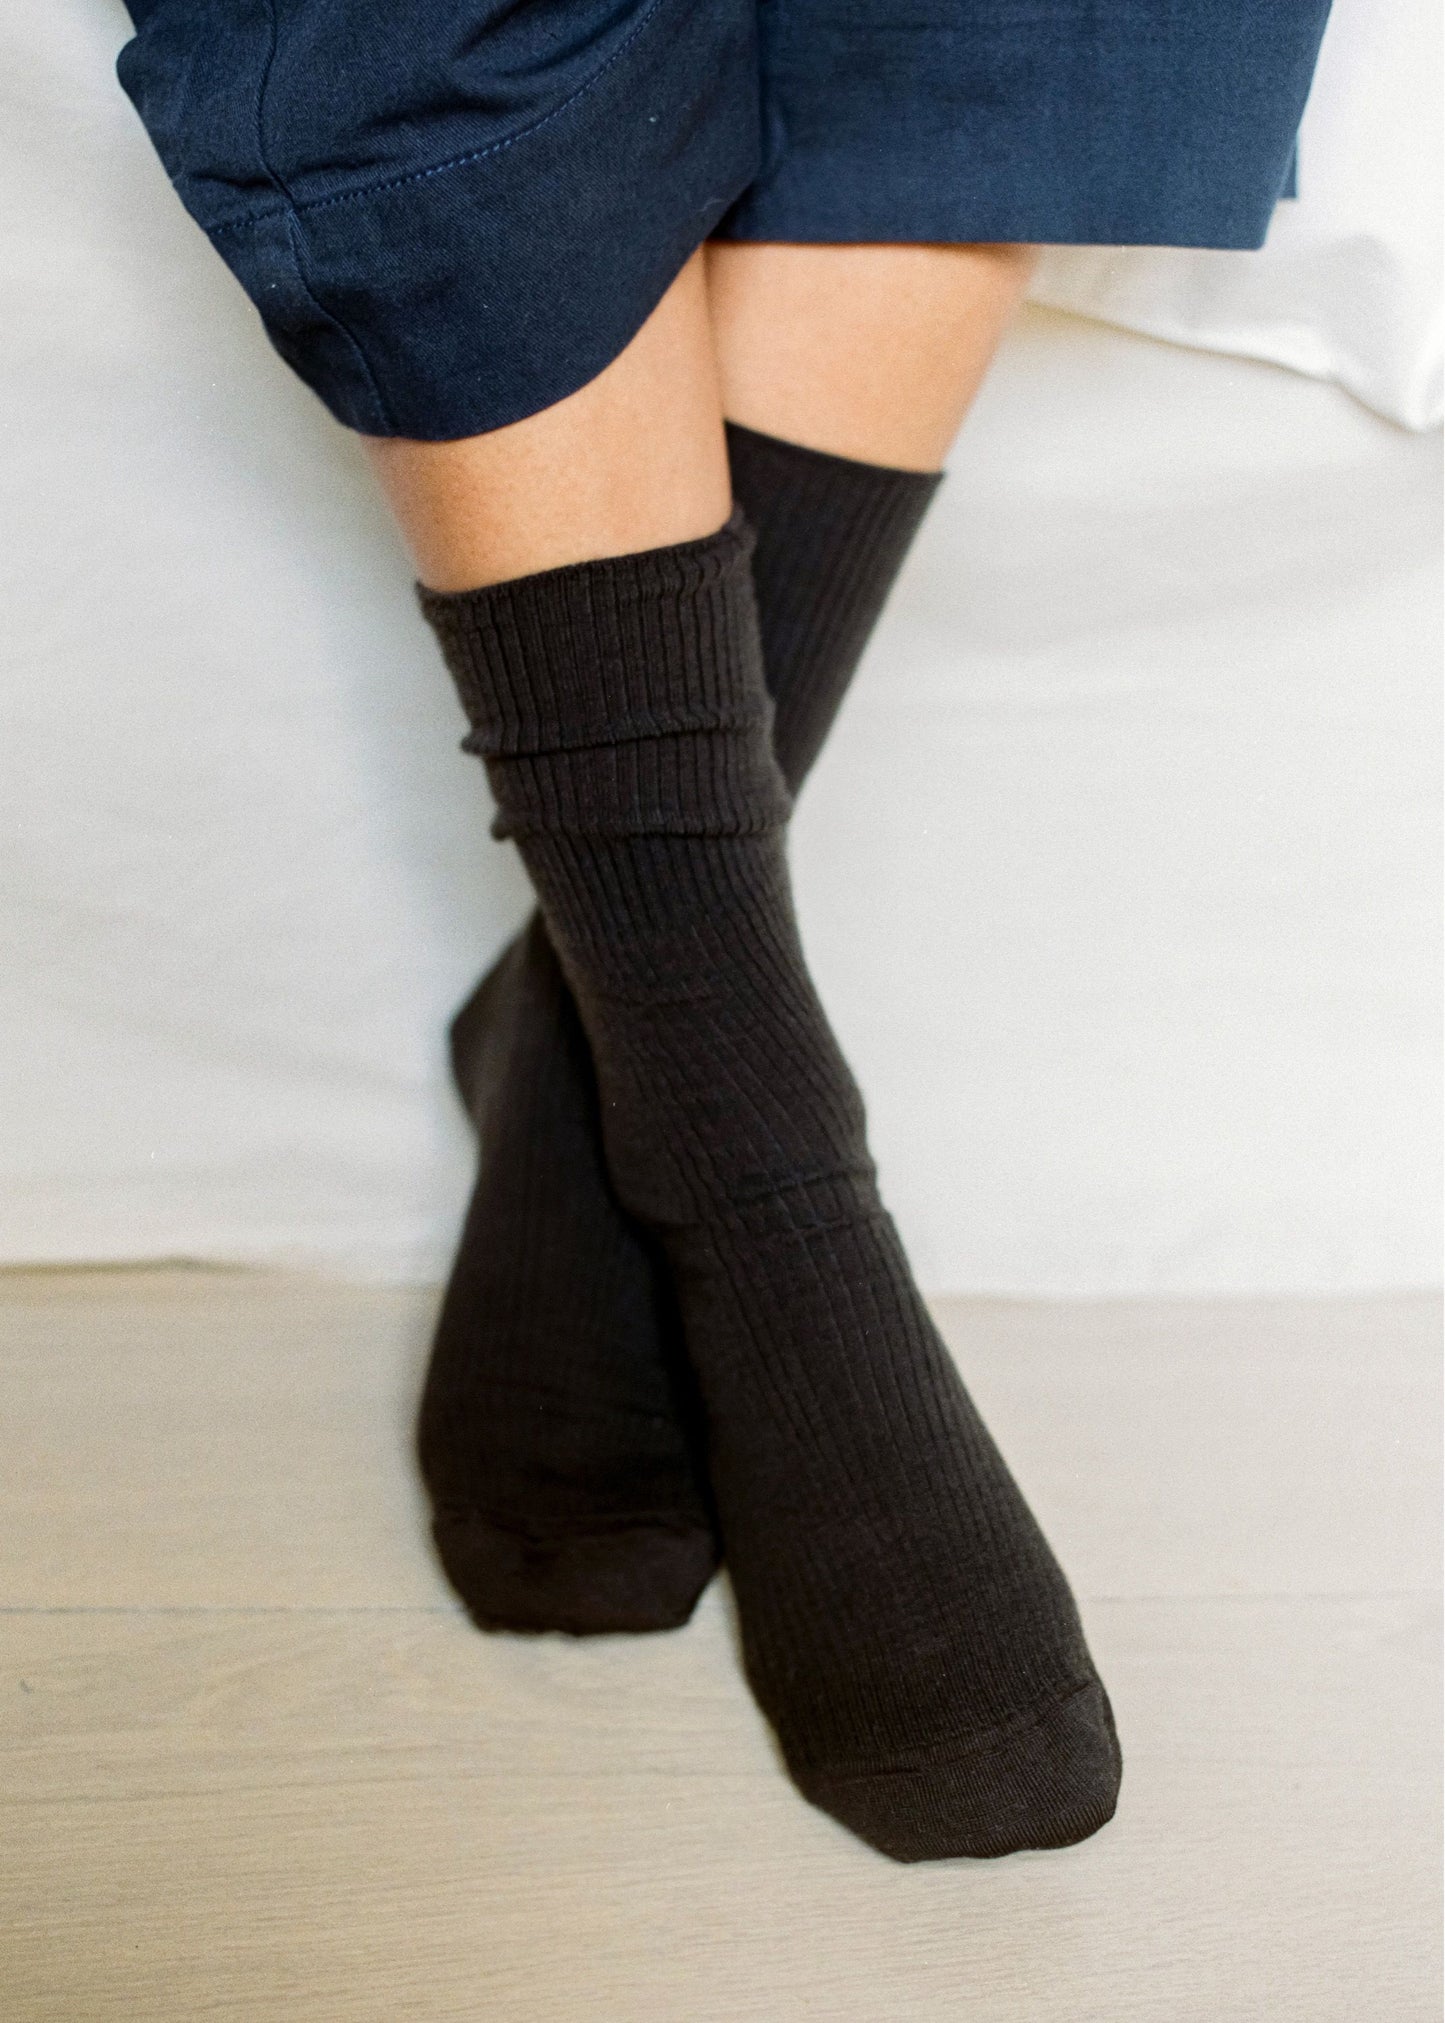 Aiayu "Wool Rib Socks" Brown